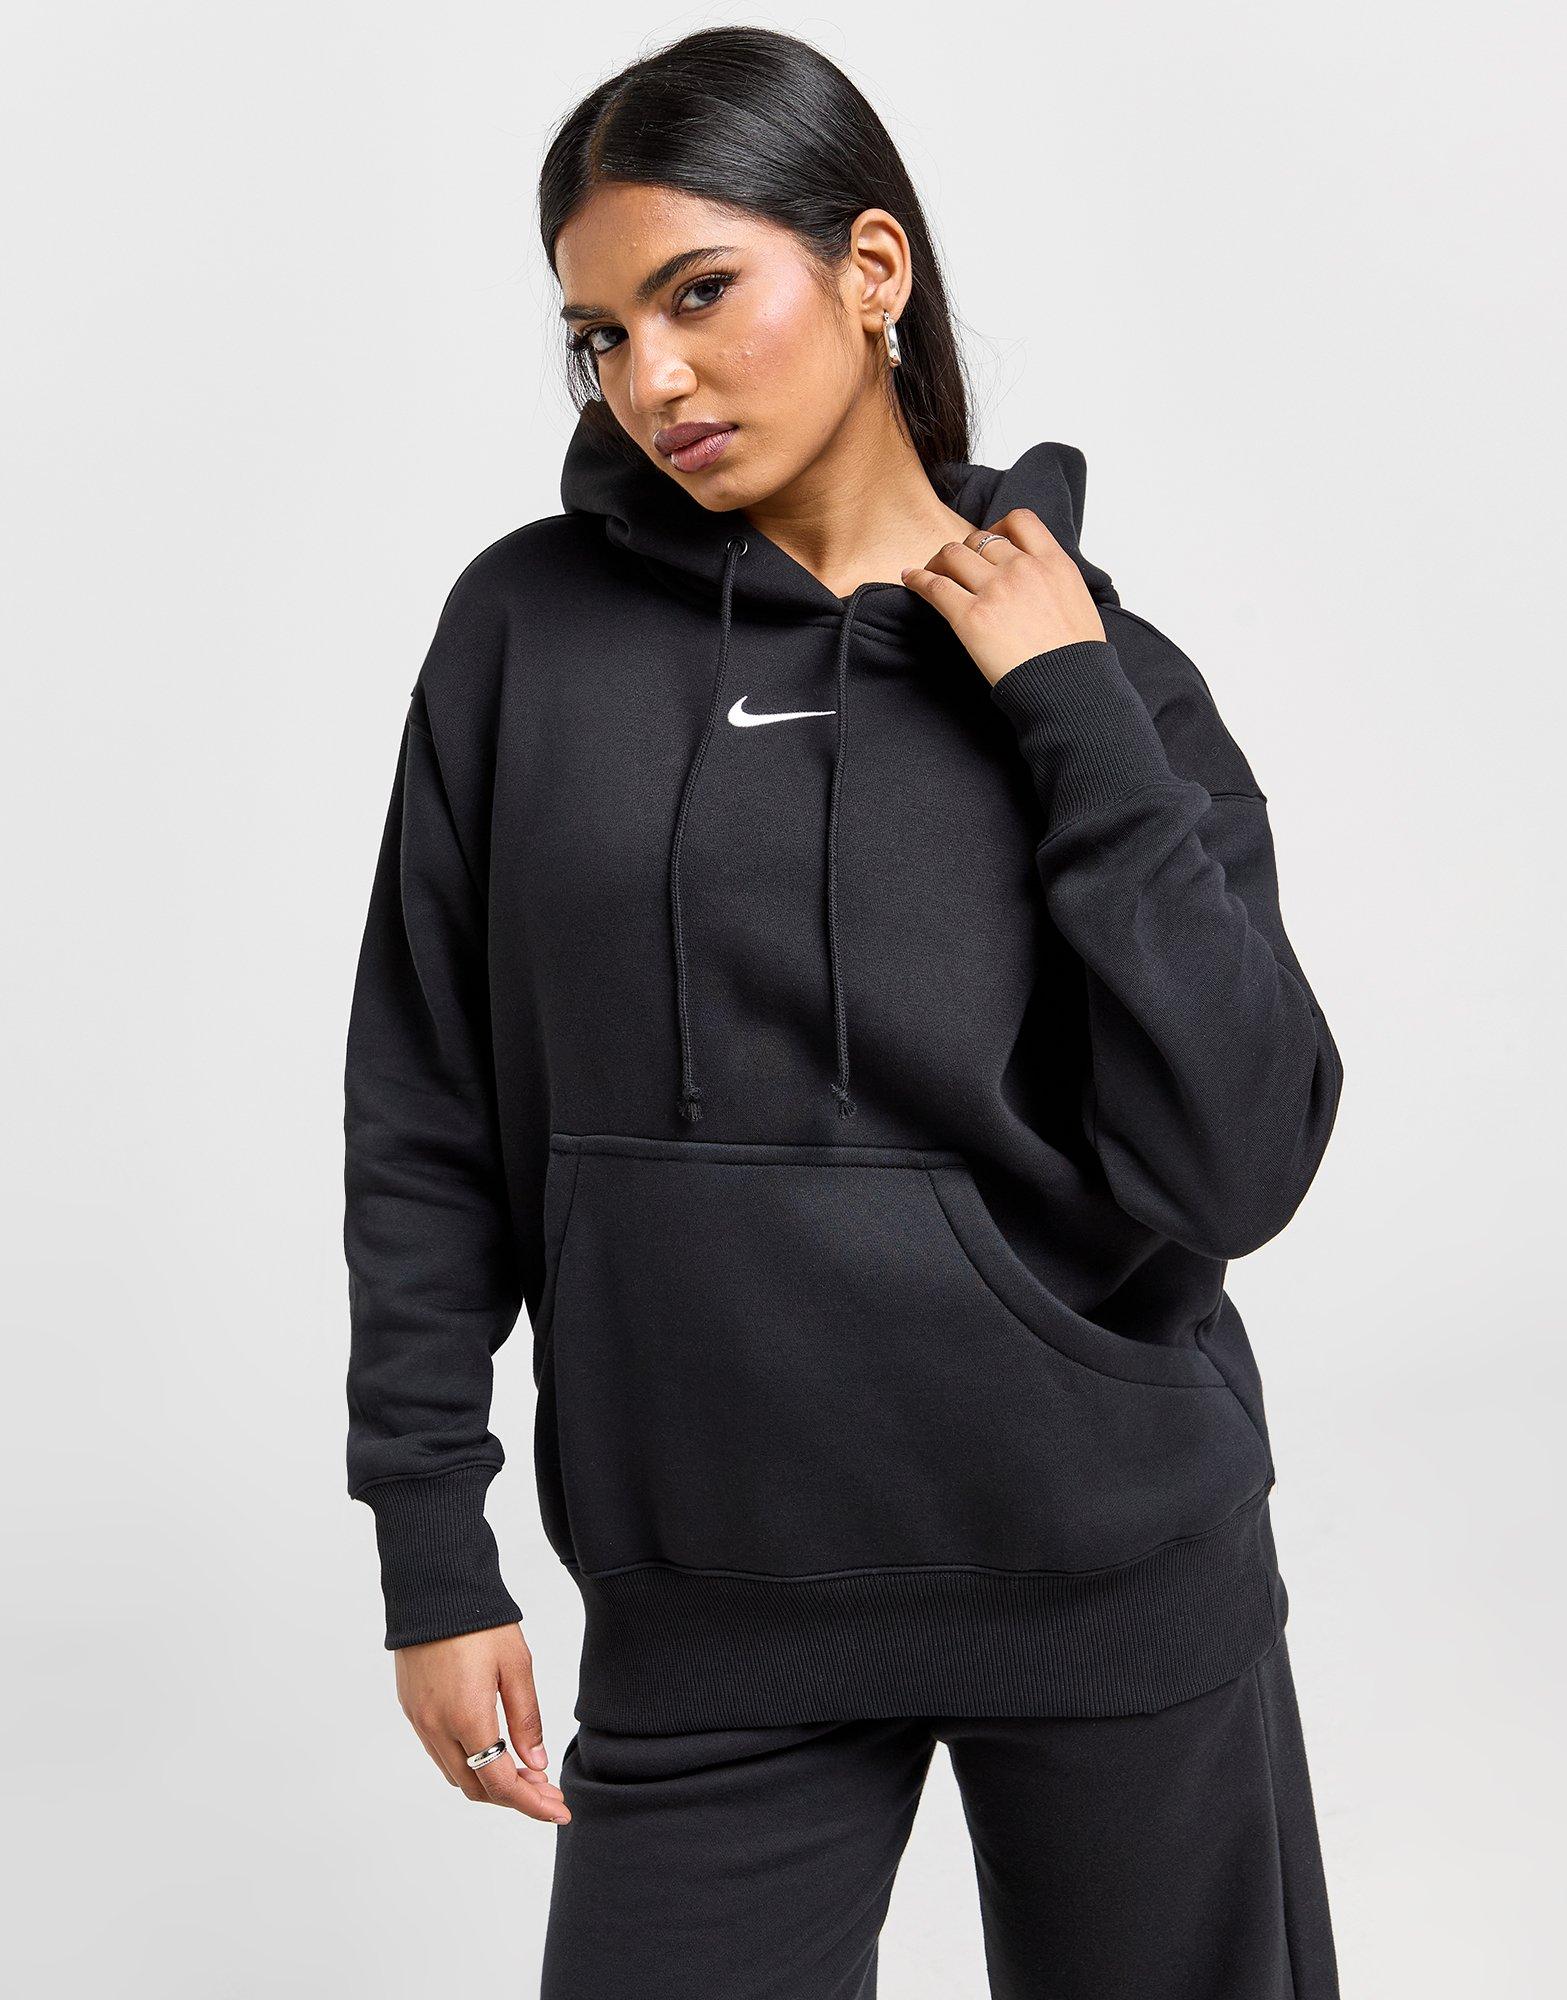 Nike sweat capuche femme - Cdiscount